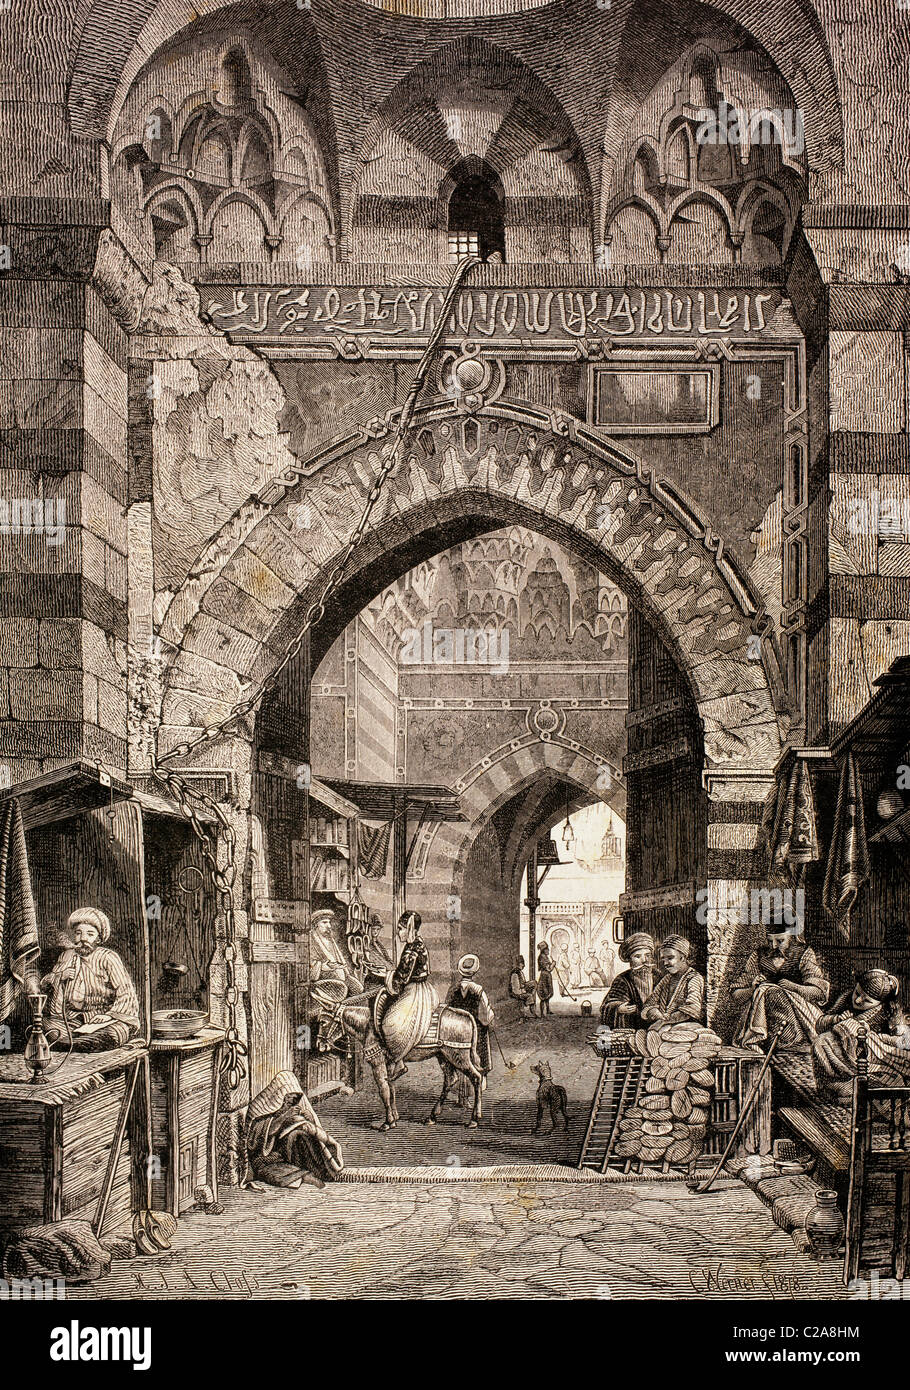 Ingresso al Khan el-Khalili souk o mercato del Cairo in Egitto nel XIX secolo. Foto Stock